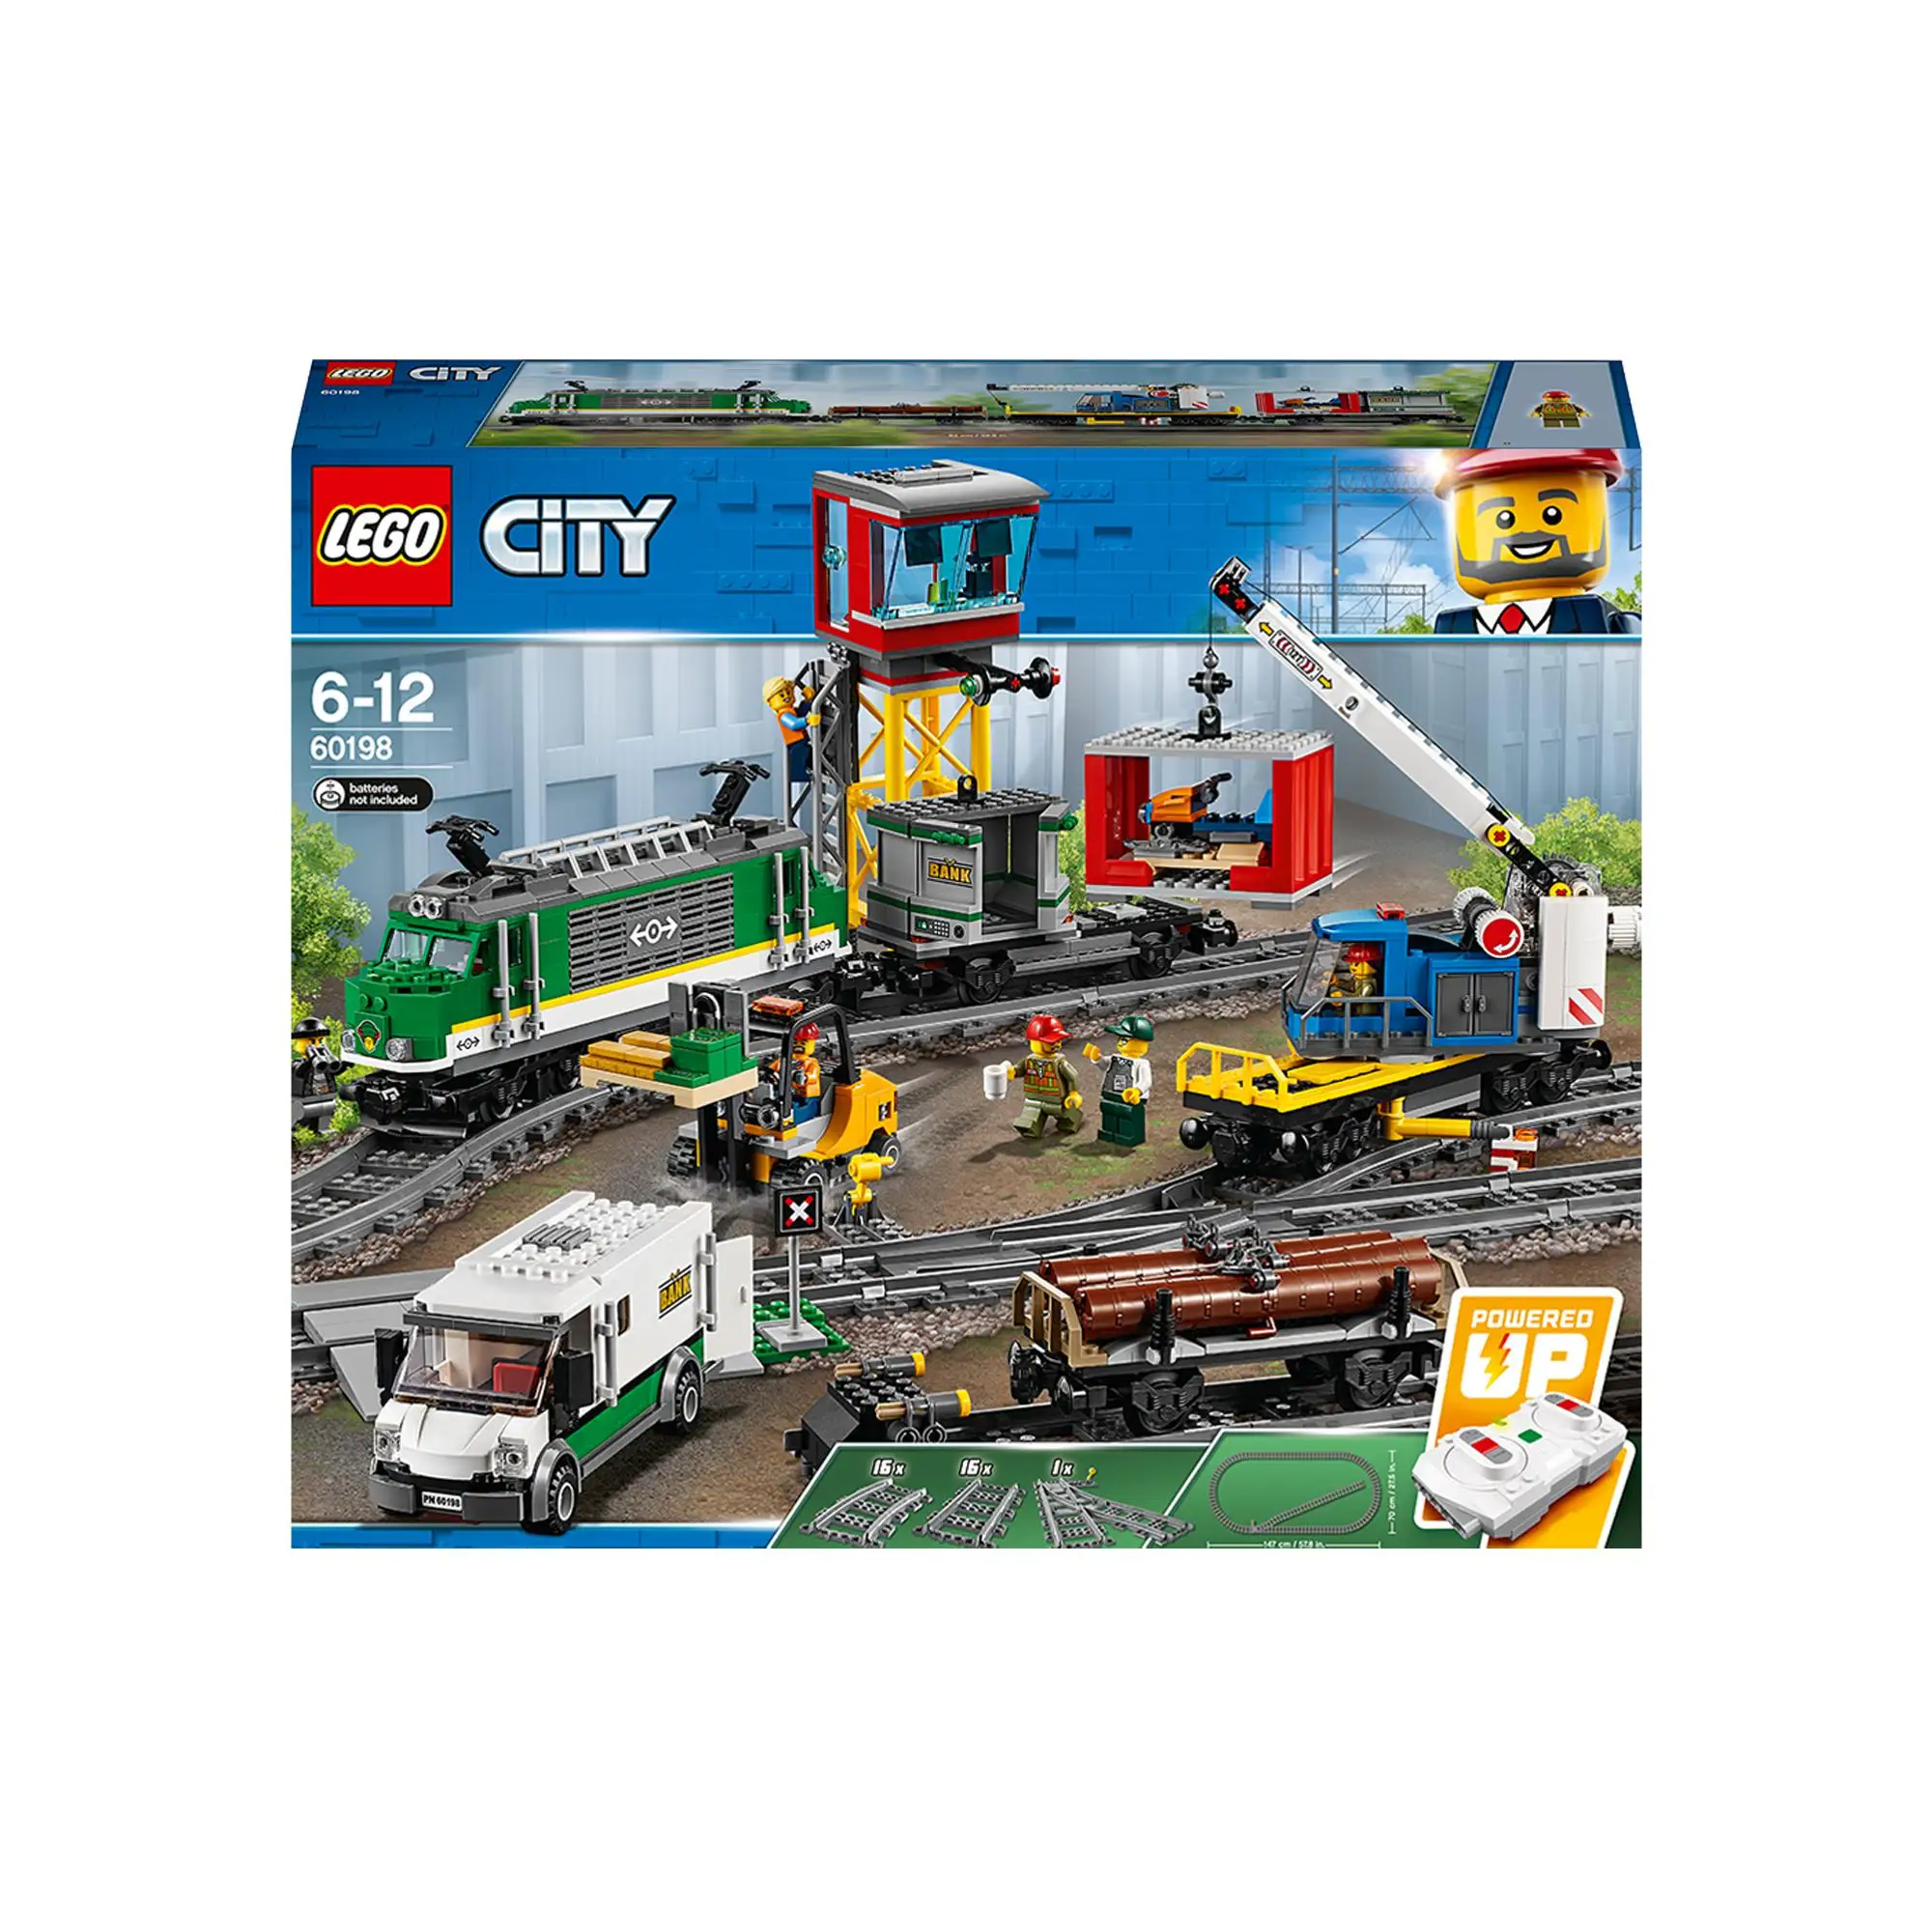 Lego Original City Trains | Goods Train Toy | Kids Construction Set, With Bluetooth Remote Control (60198) - Soft Plastic Blocks -